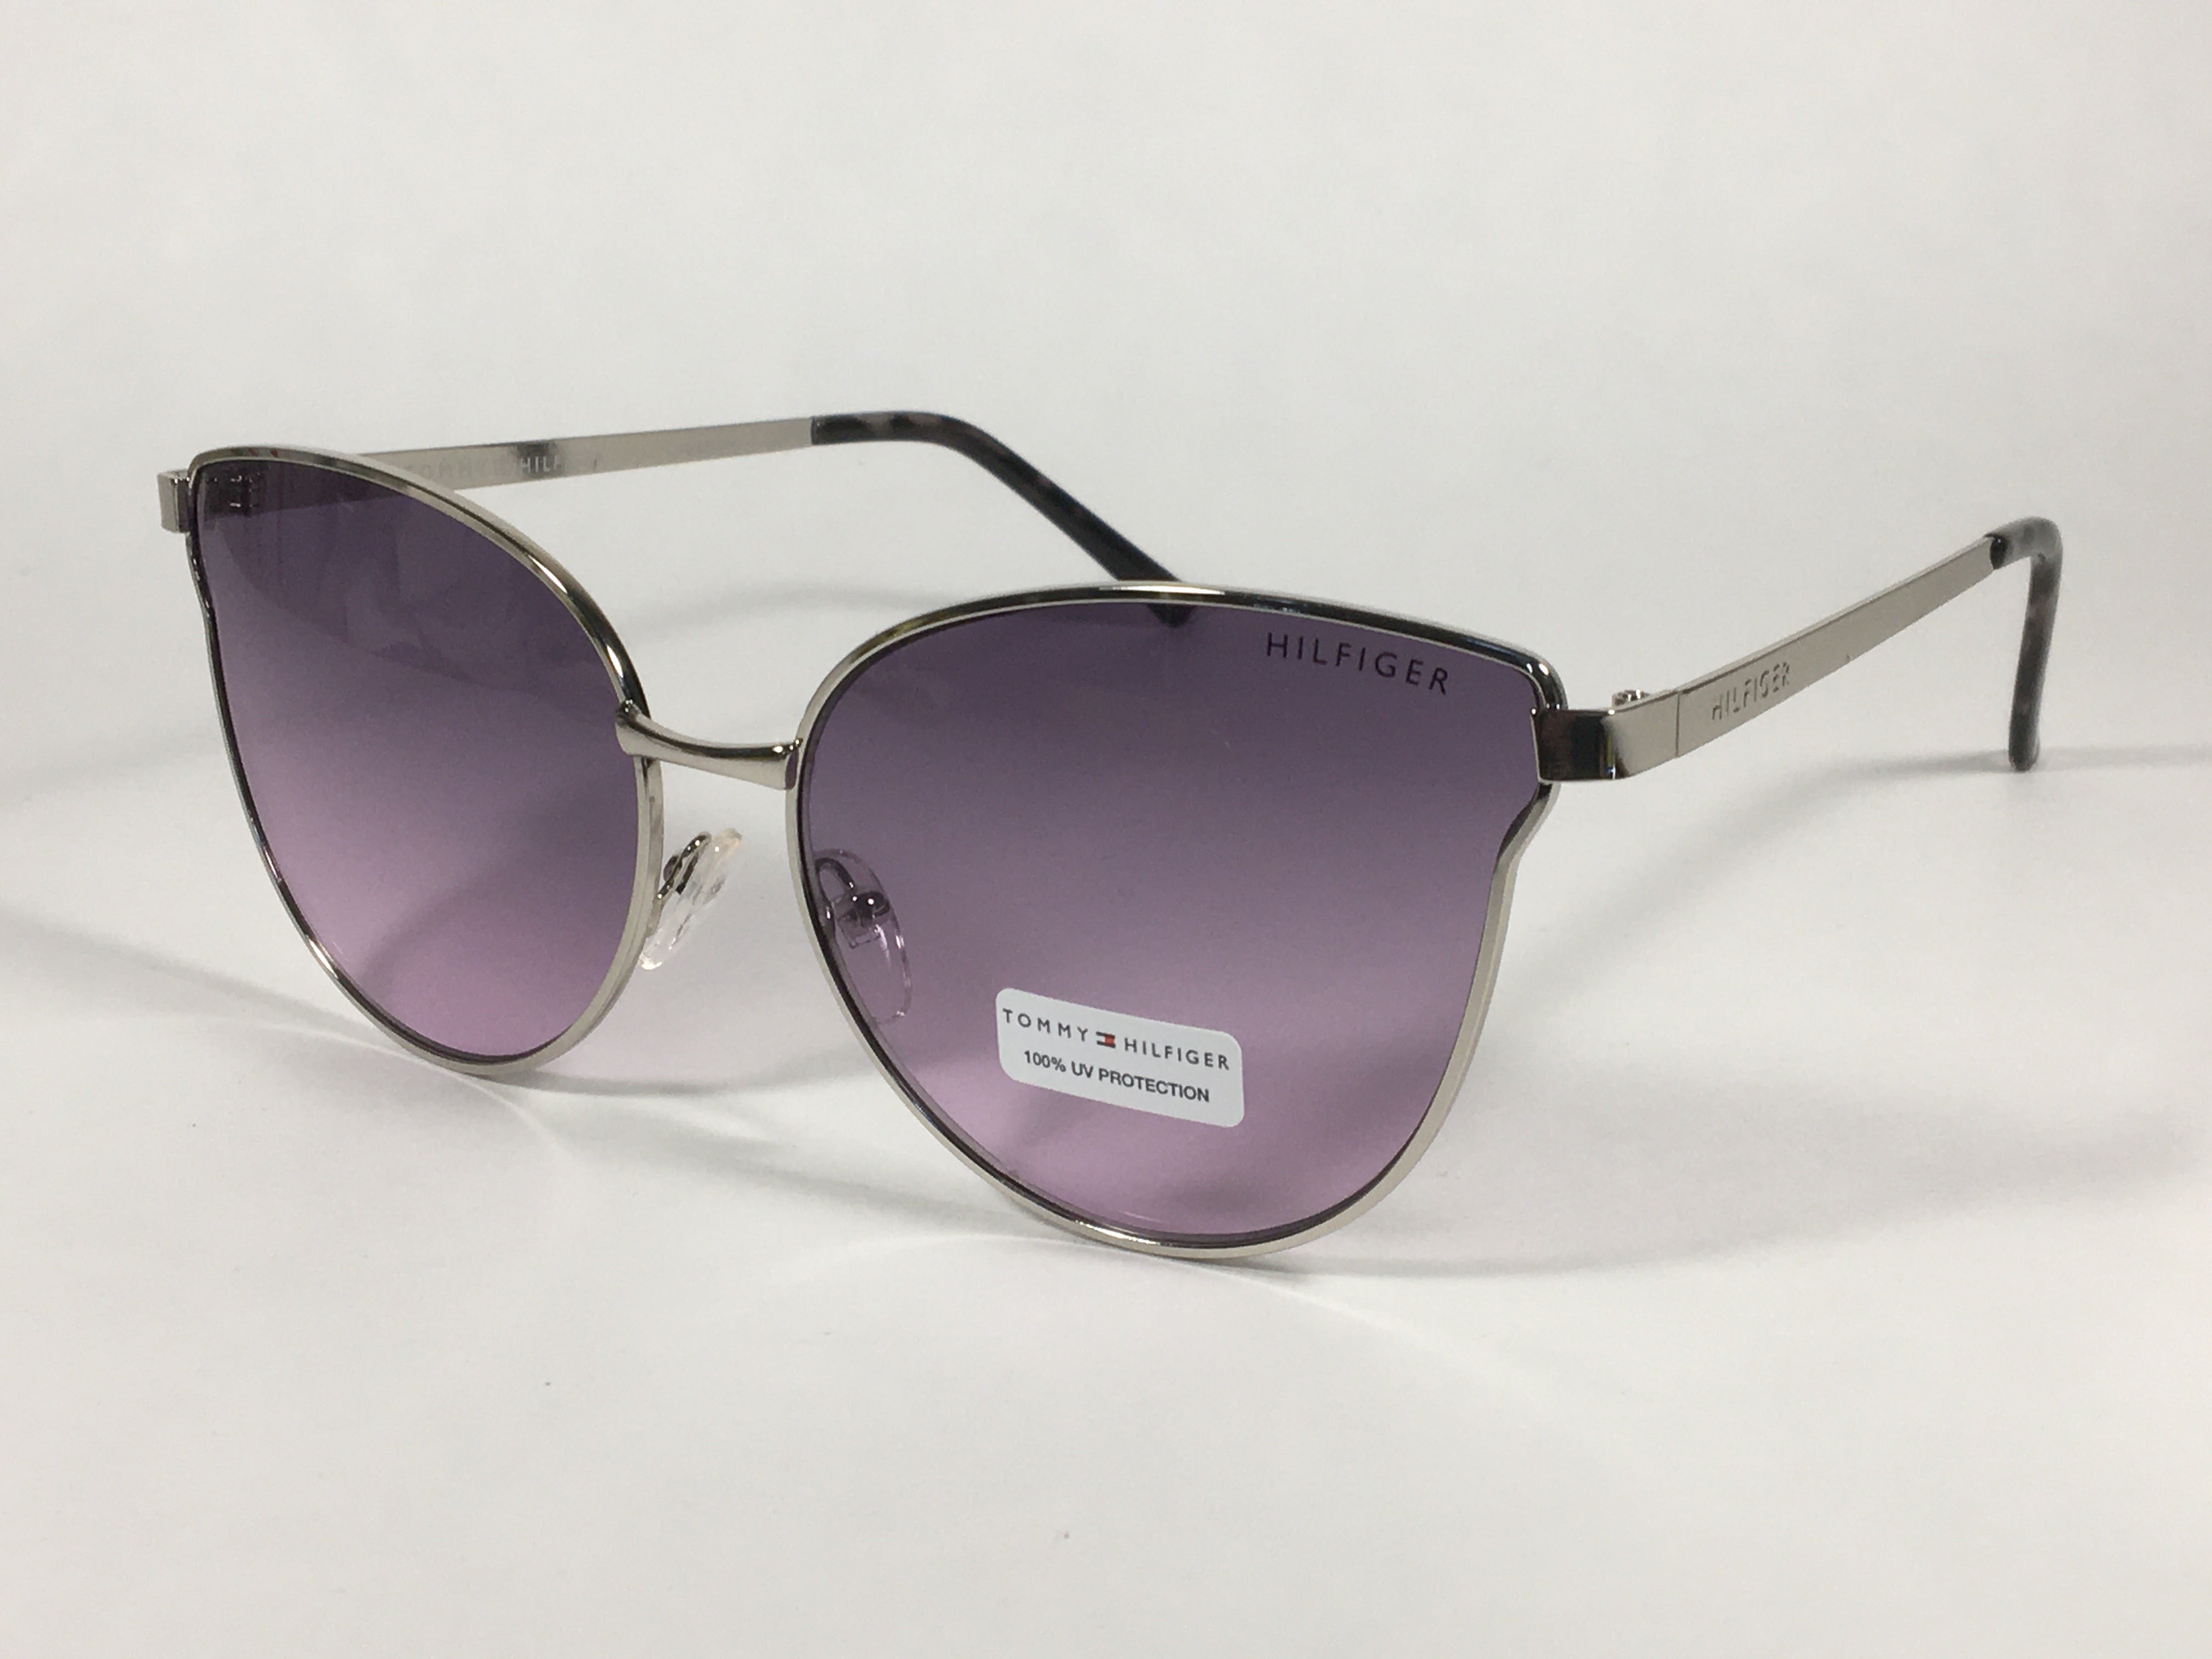 Tommy Hilfiger Zendaya Cat Eye Sunglasses Silver Frame Purple Gradient Lens  ZENDAYA WM OL482